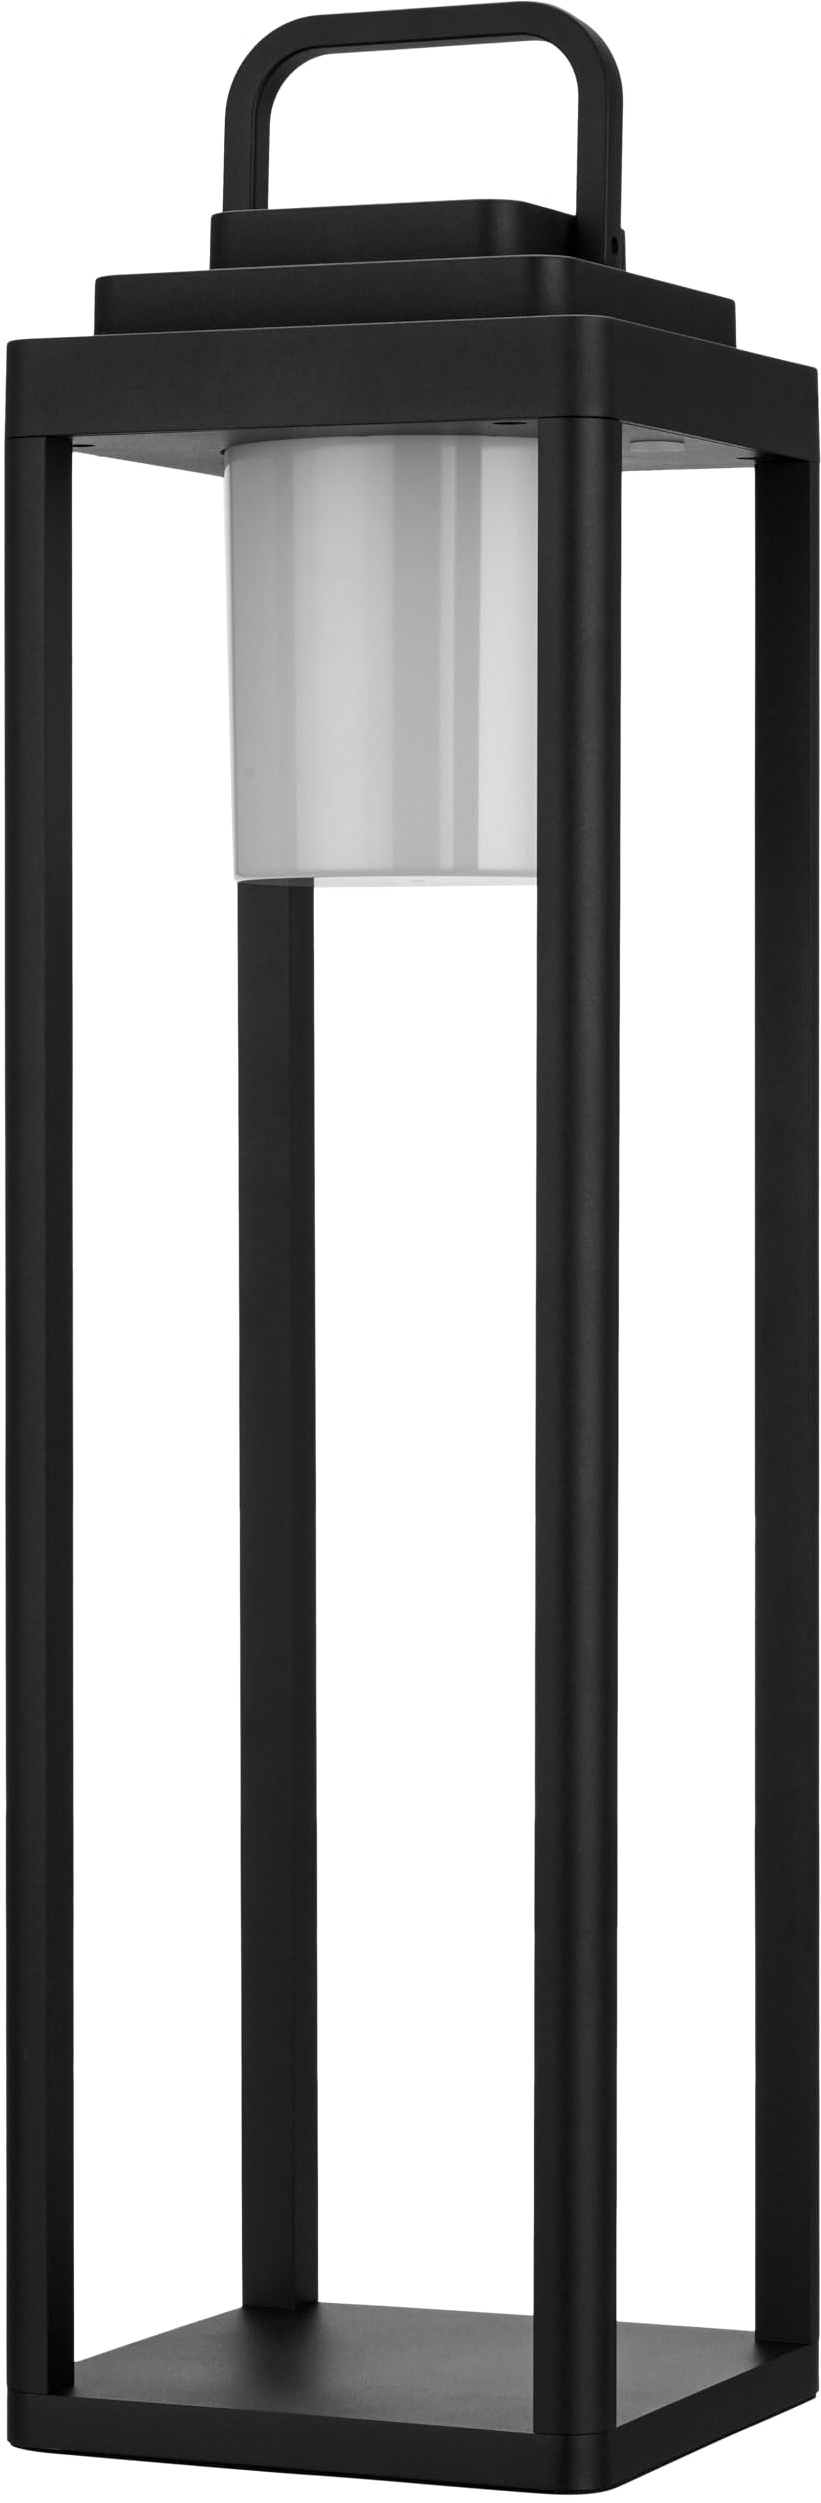 REV LED Lampe - Akku Laterne aus Aluminium, stilvolle Aussenlampe mit Dimmfunktion, H:50cm, 160lm, 2W, 4000mAh, IP65, schwarz